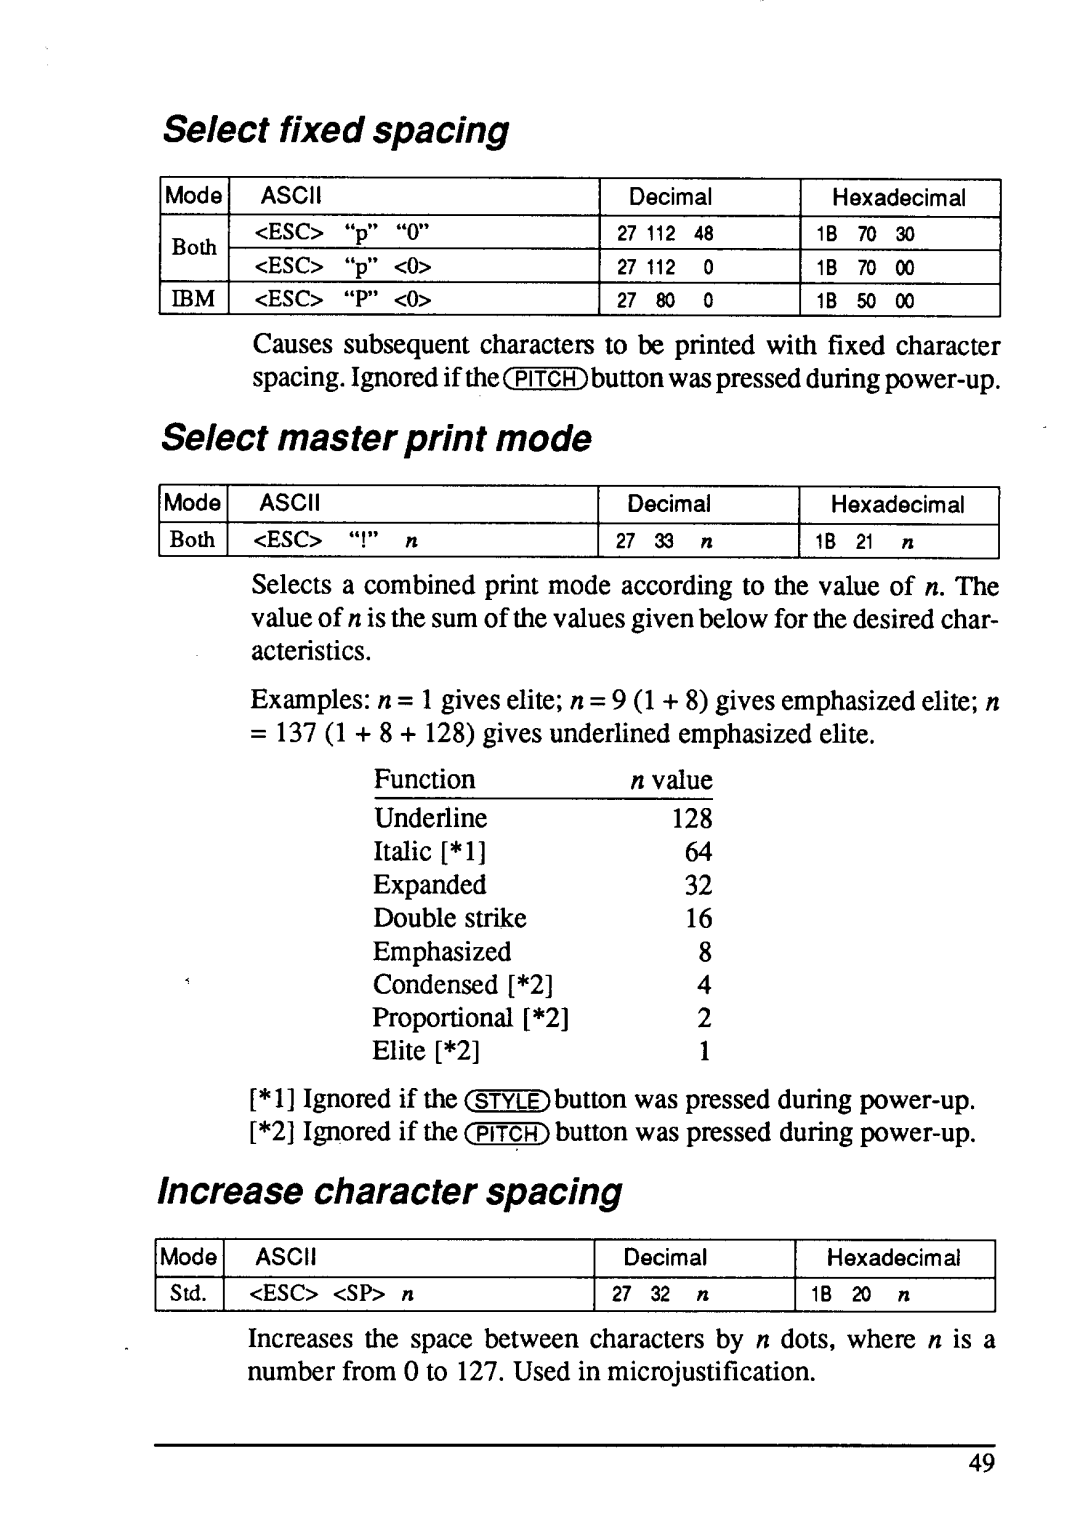 Star Micronics LC24-15 user manual Select fixed spacing, Select master print mode, Increase character spacing, “p” ‘VI” 